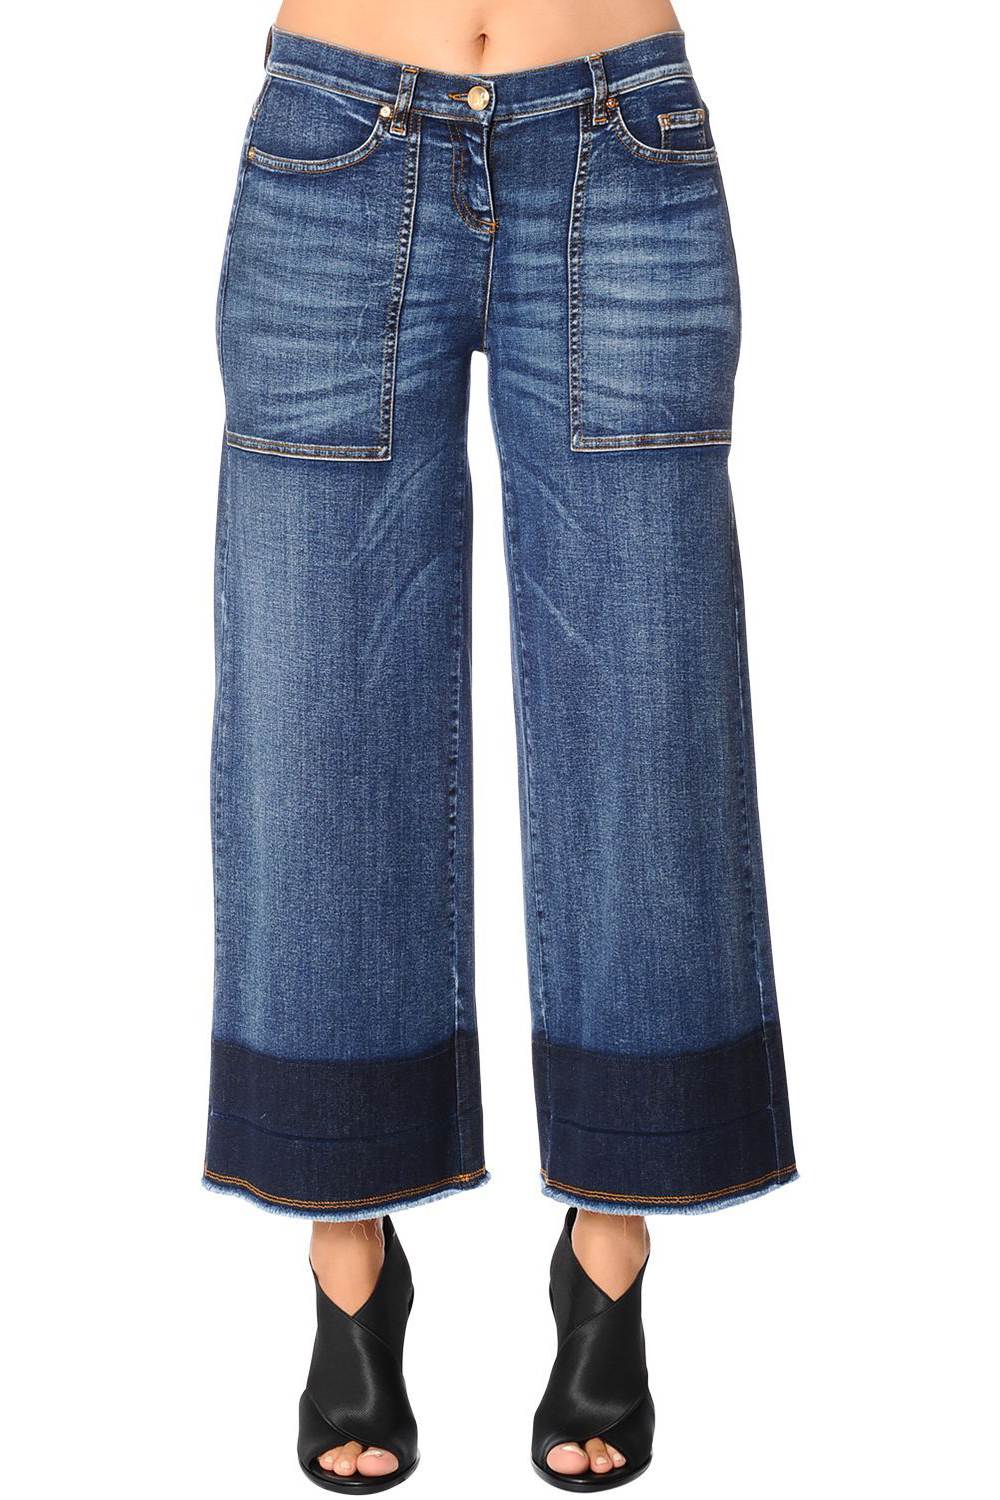 ashley graham marina rinaldi jeans